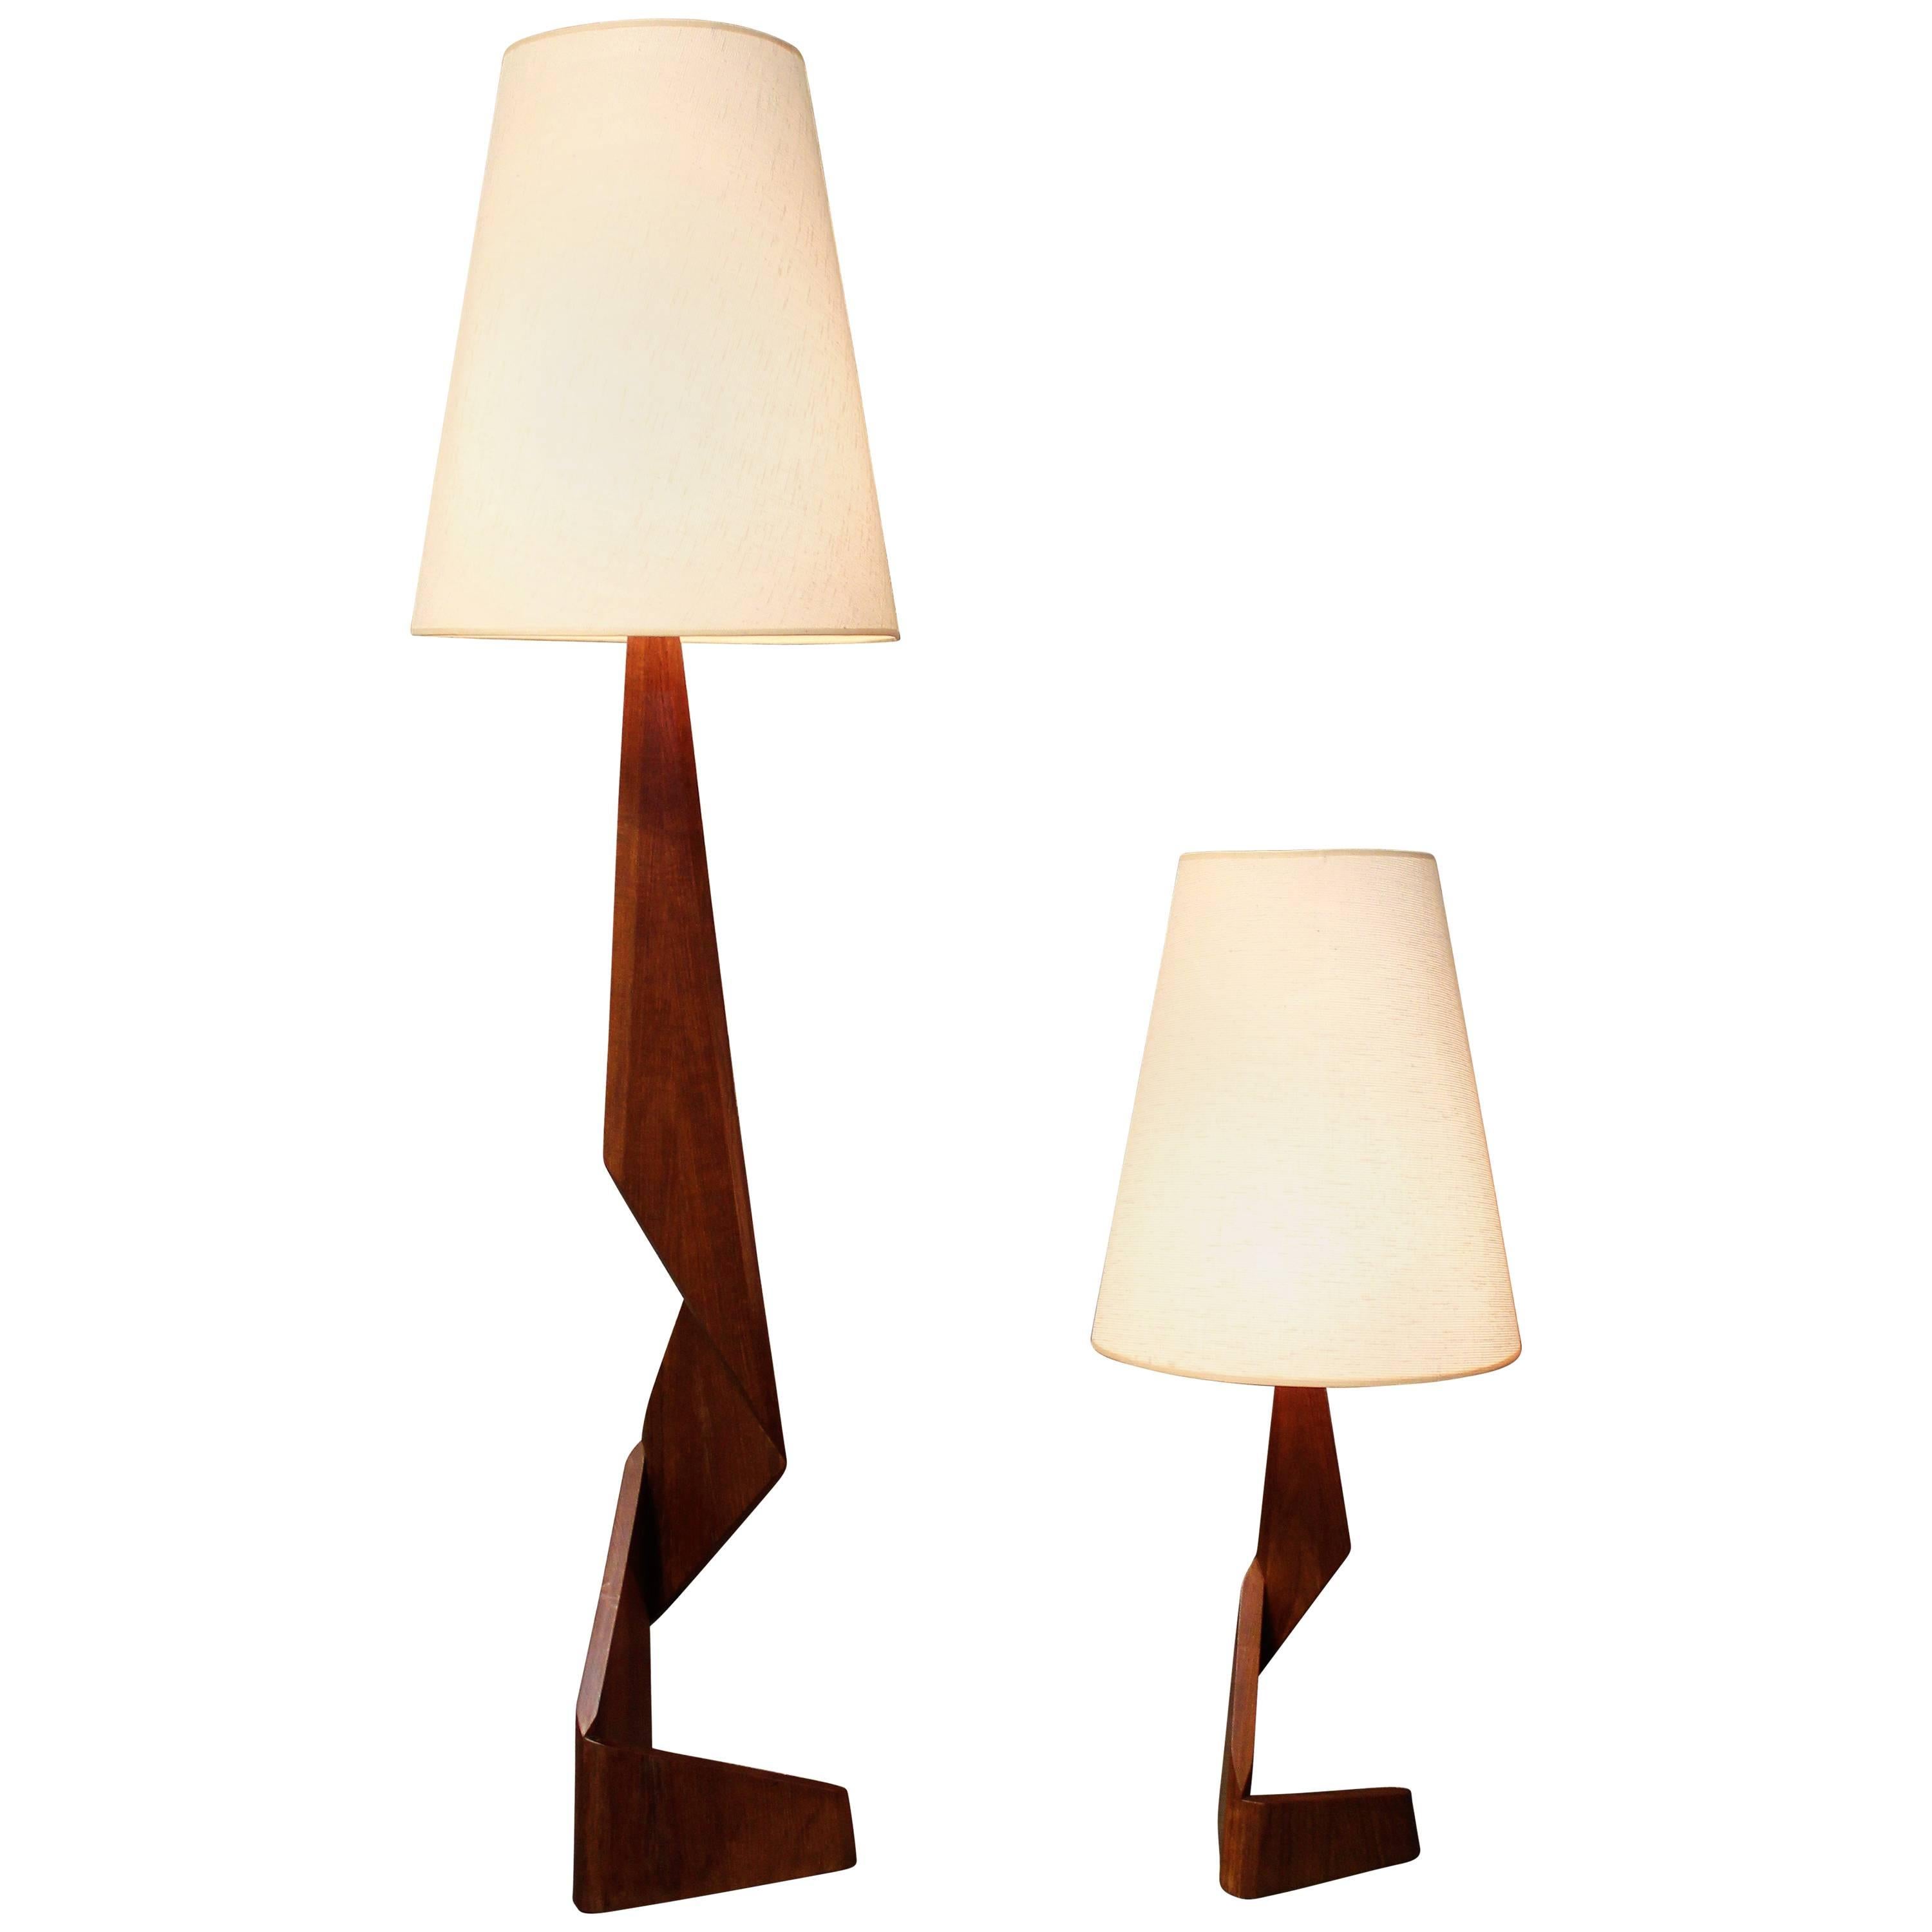 Two Danish Teak Sculptural Floor and Table Lamps